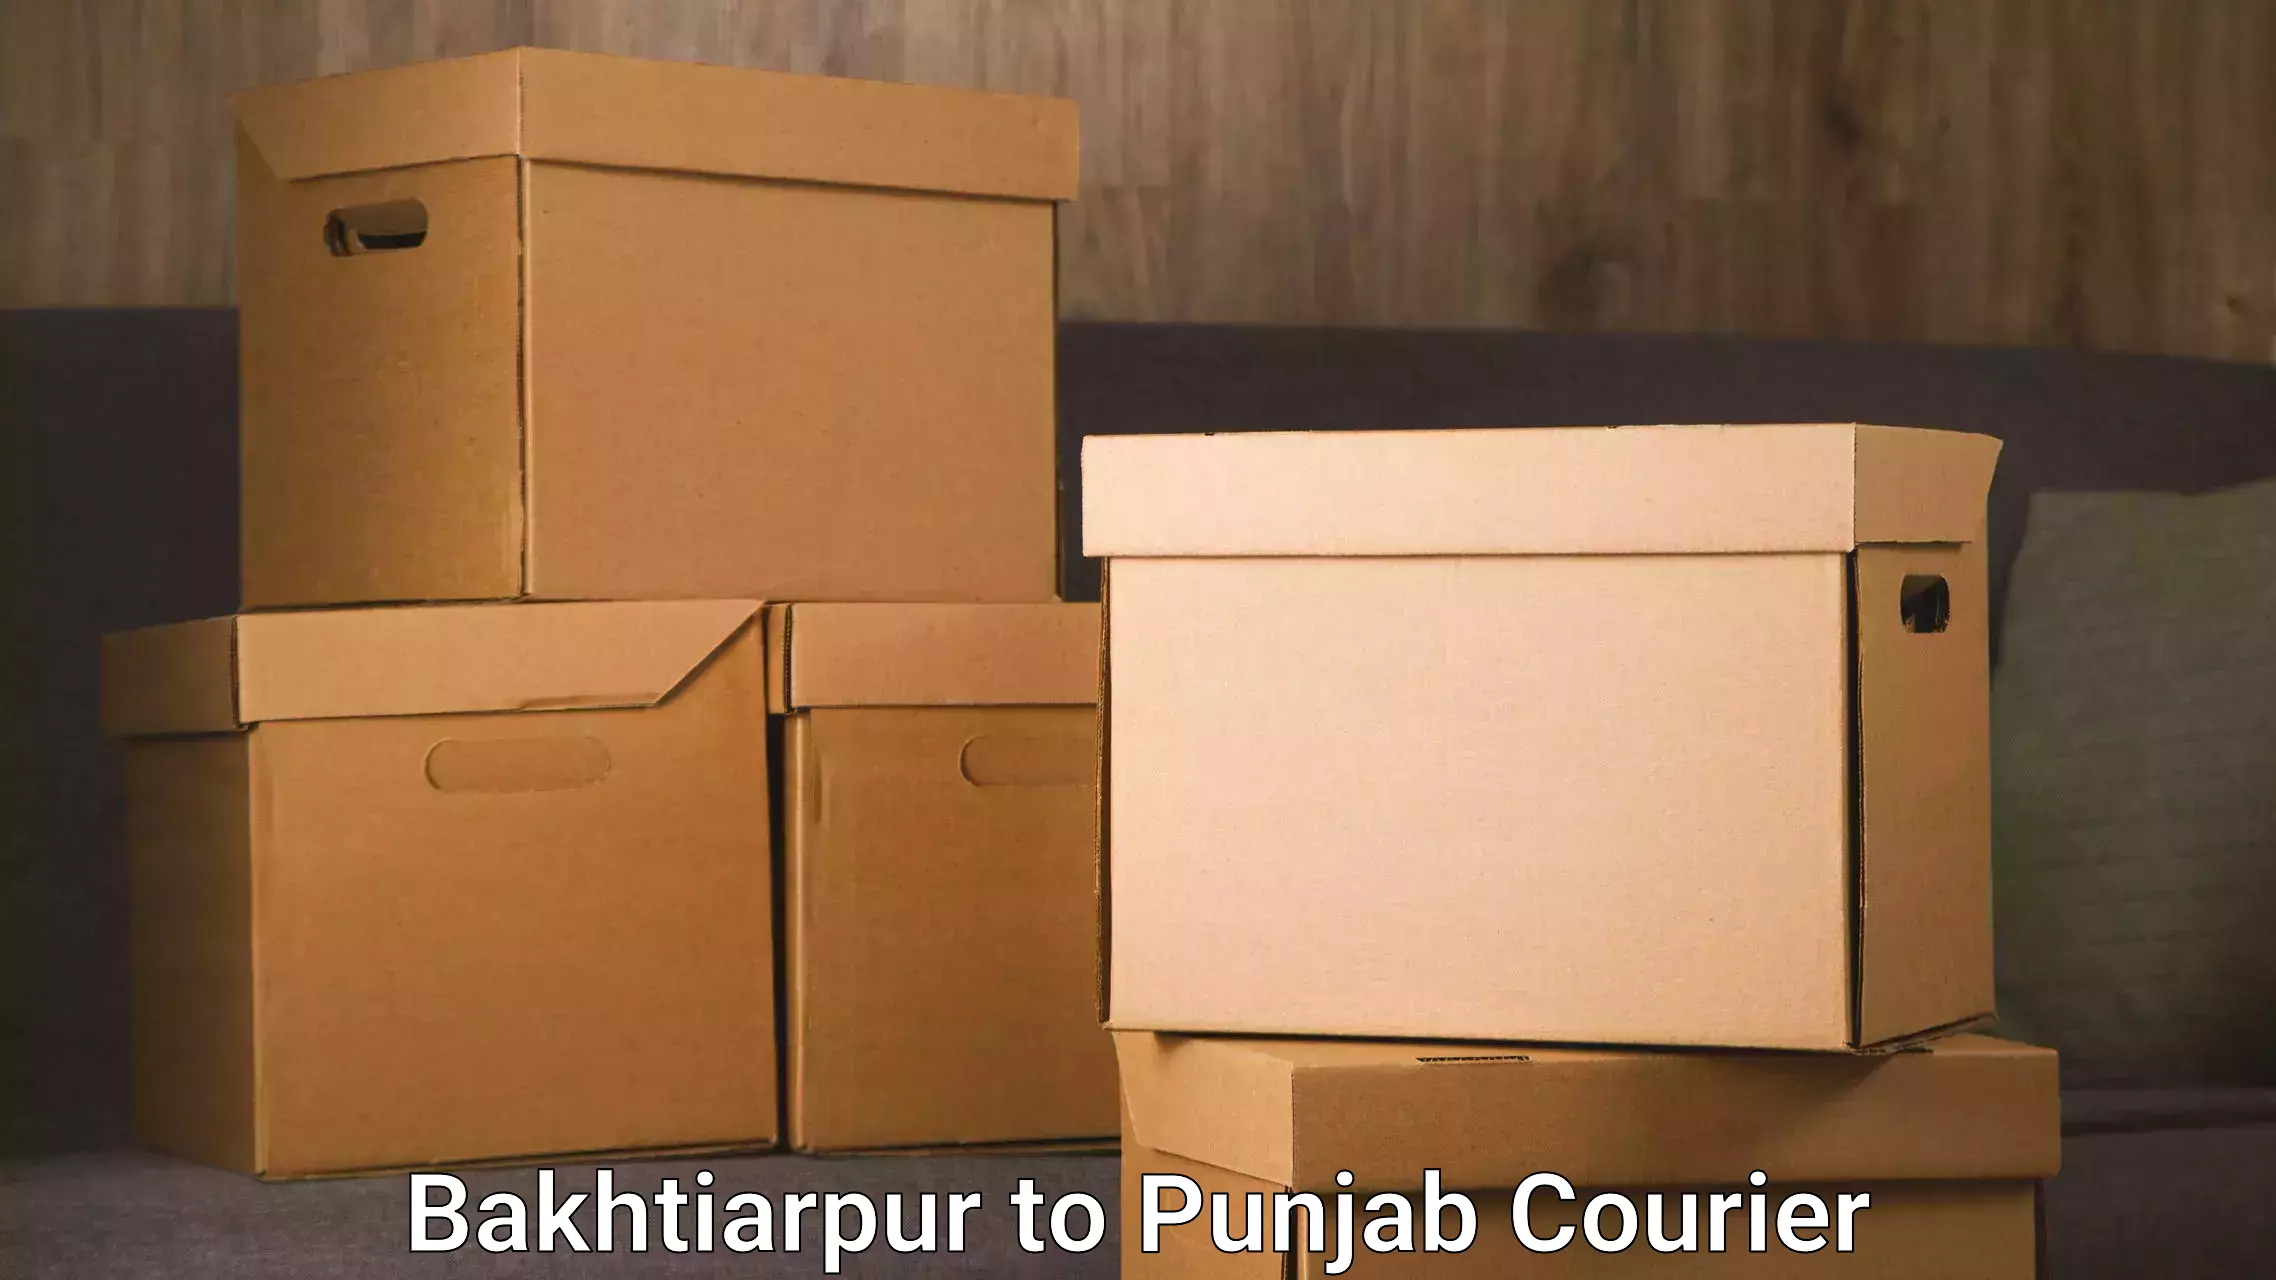 Efficient moving company Bakhtiarpur to Punjab